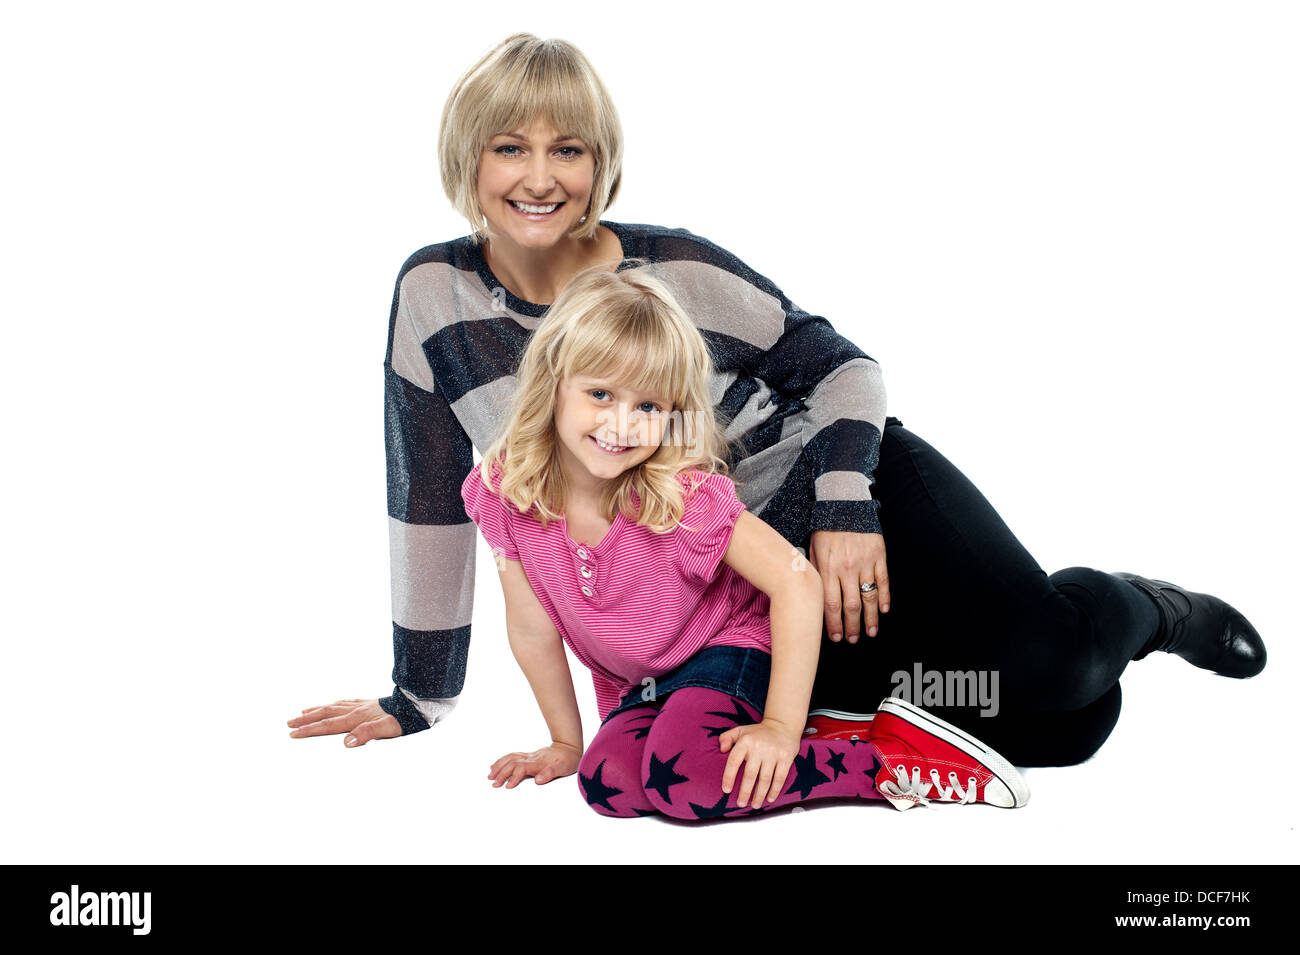 Cheerful mum and daughter sitting on studio floor. Facing camera and flashing smile. Stock Photo